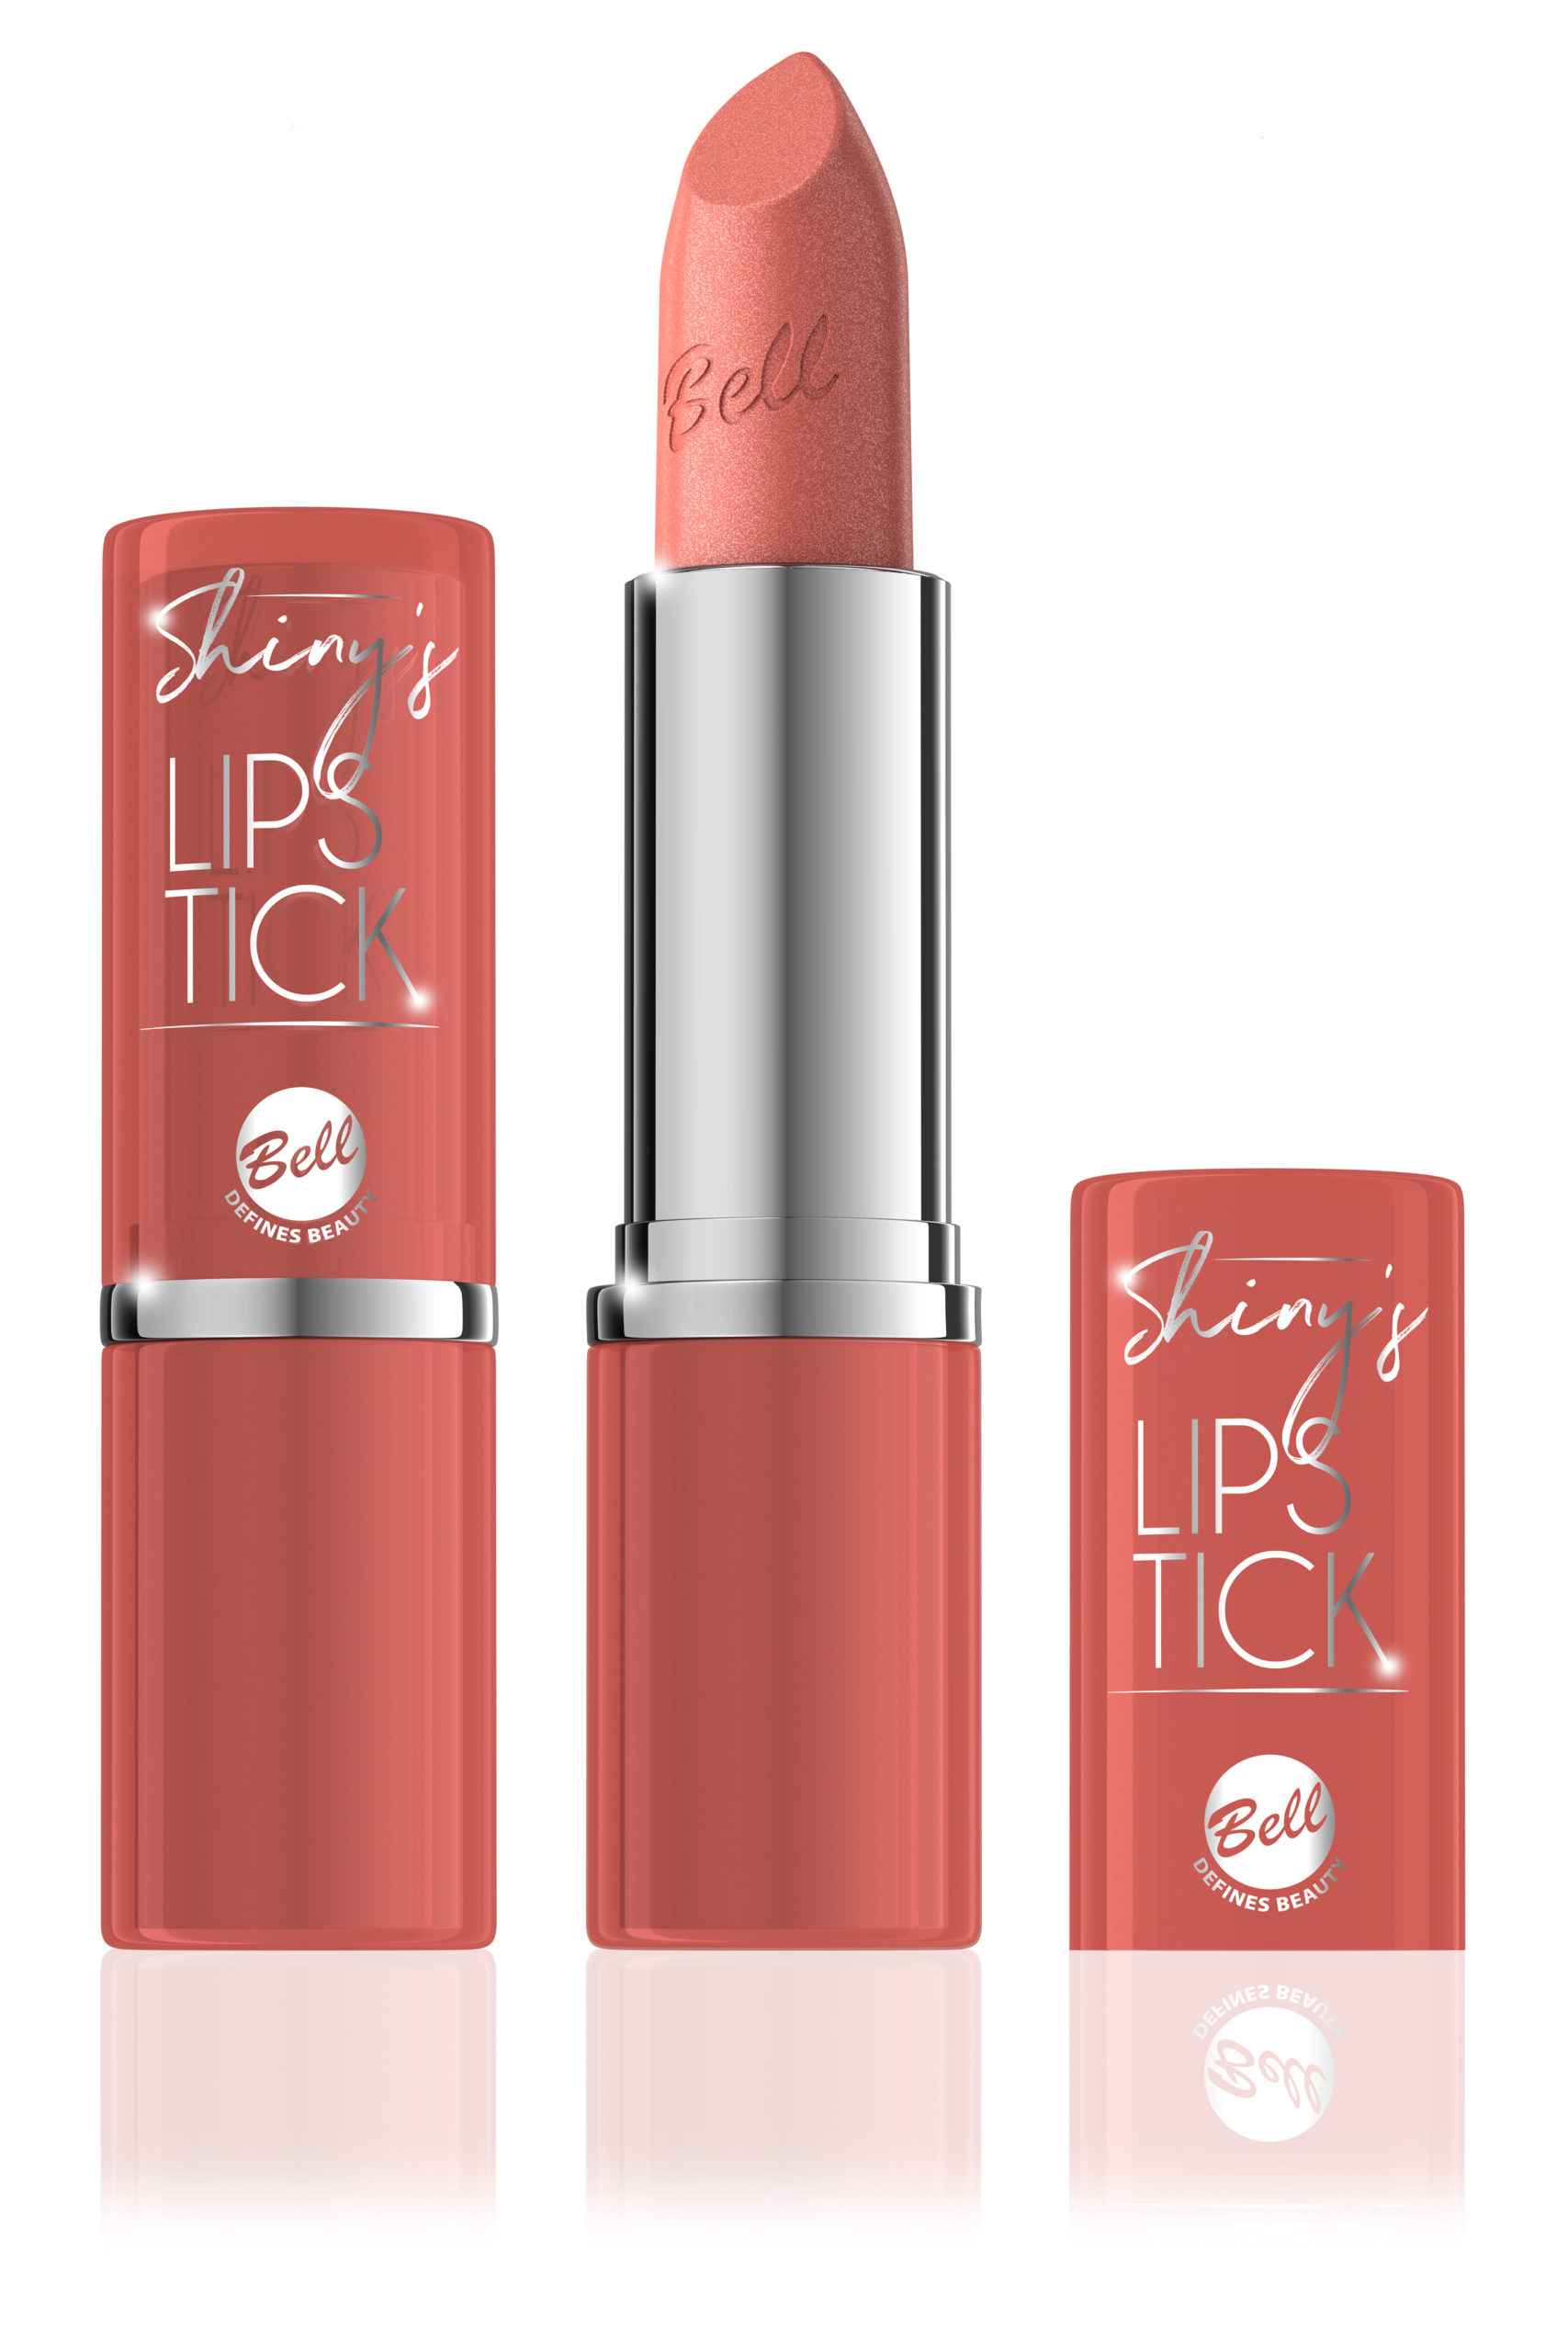 Shiny’s Lipstick